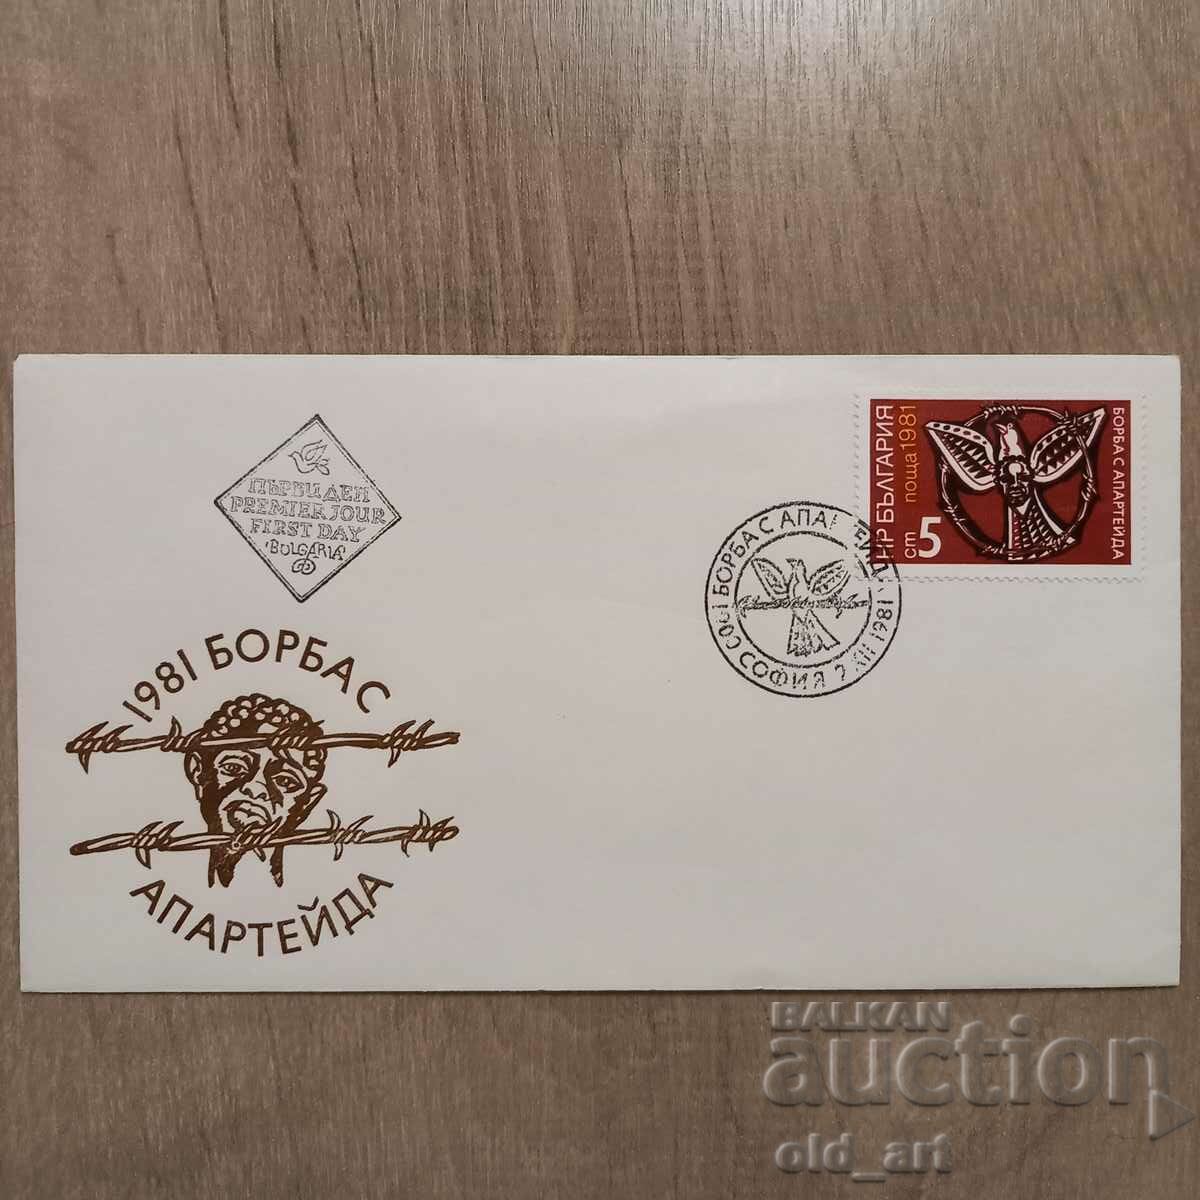 Mailing envelope - Fighting apartheid